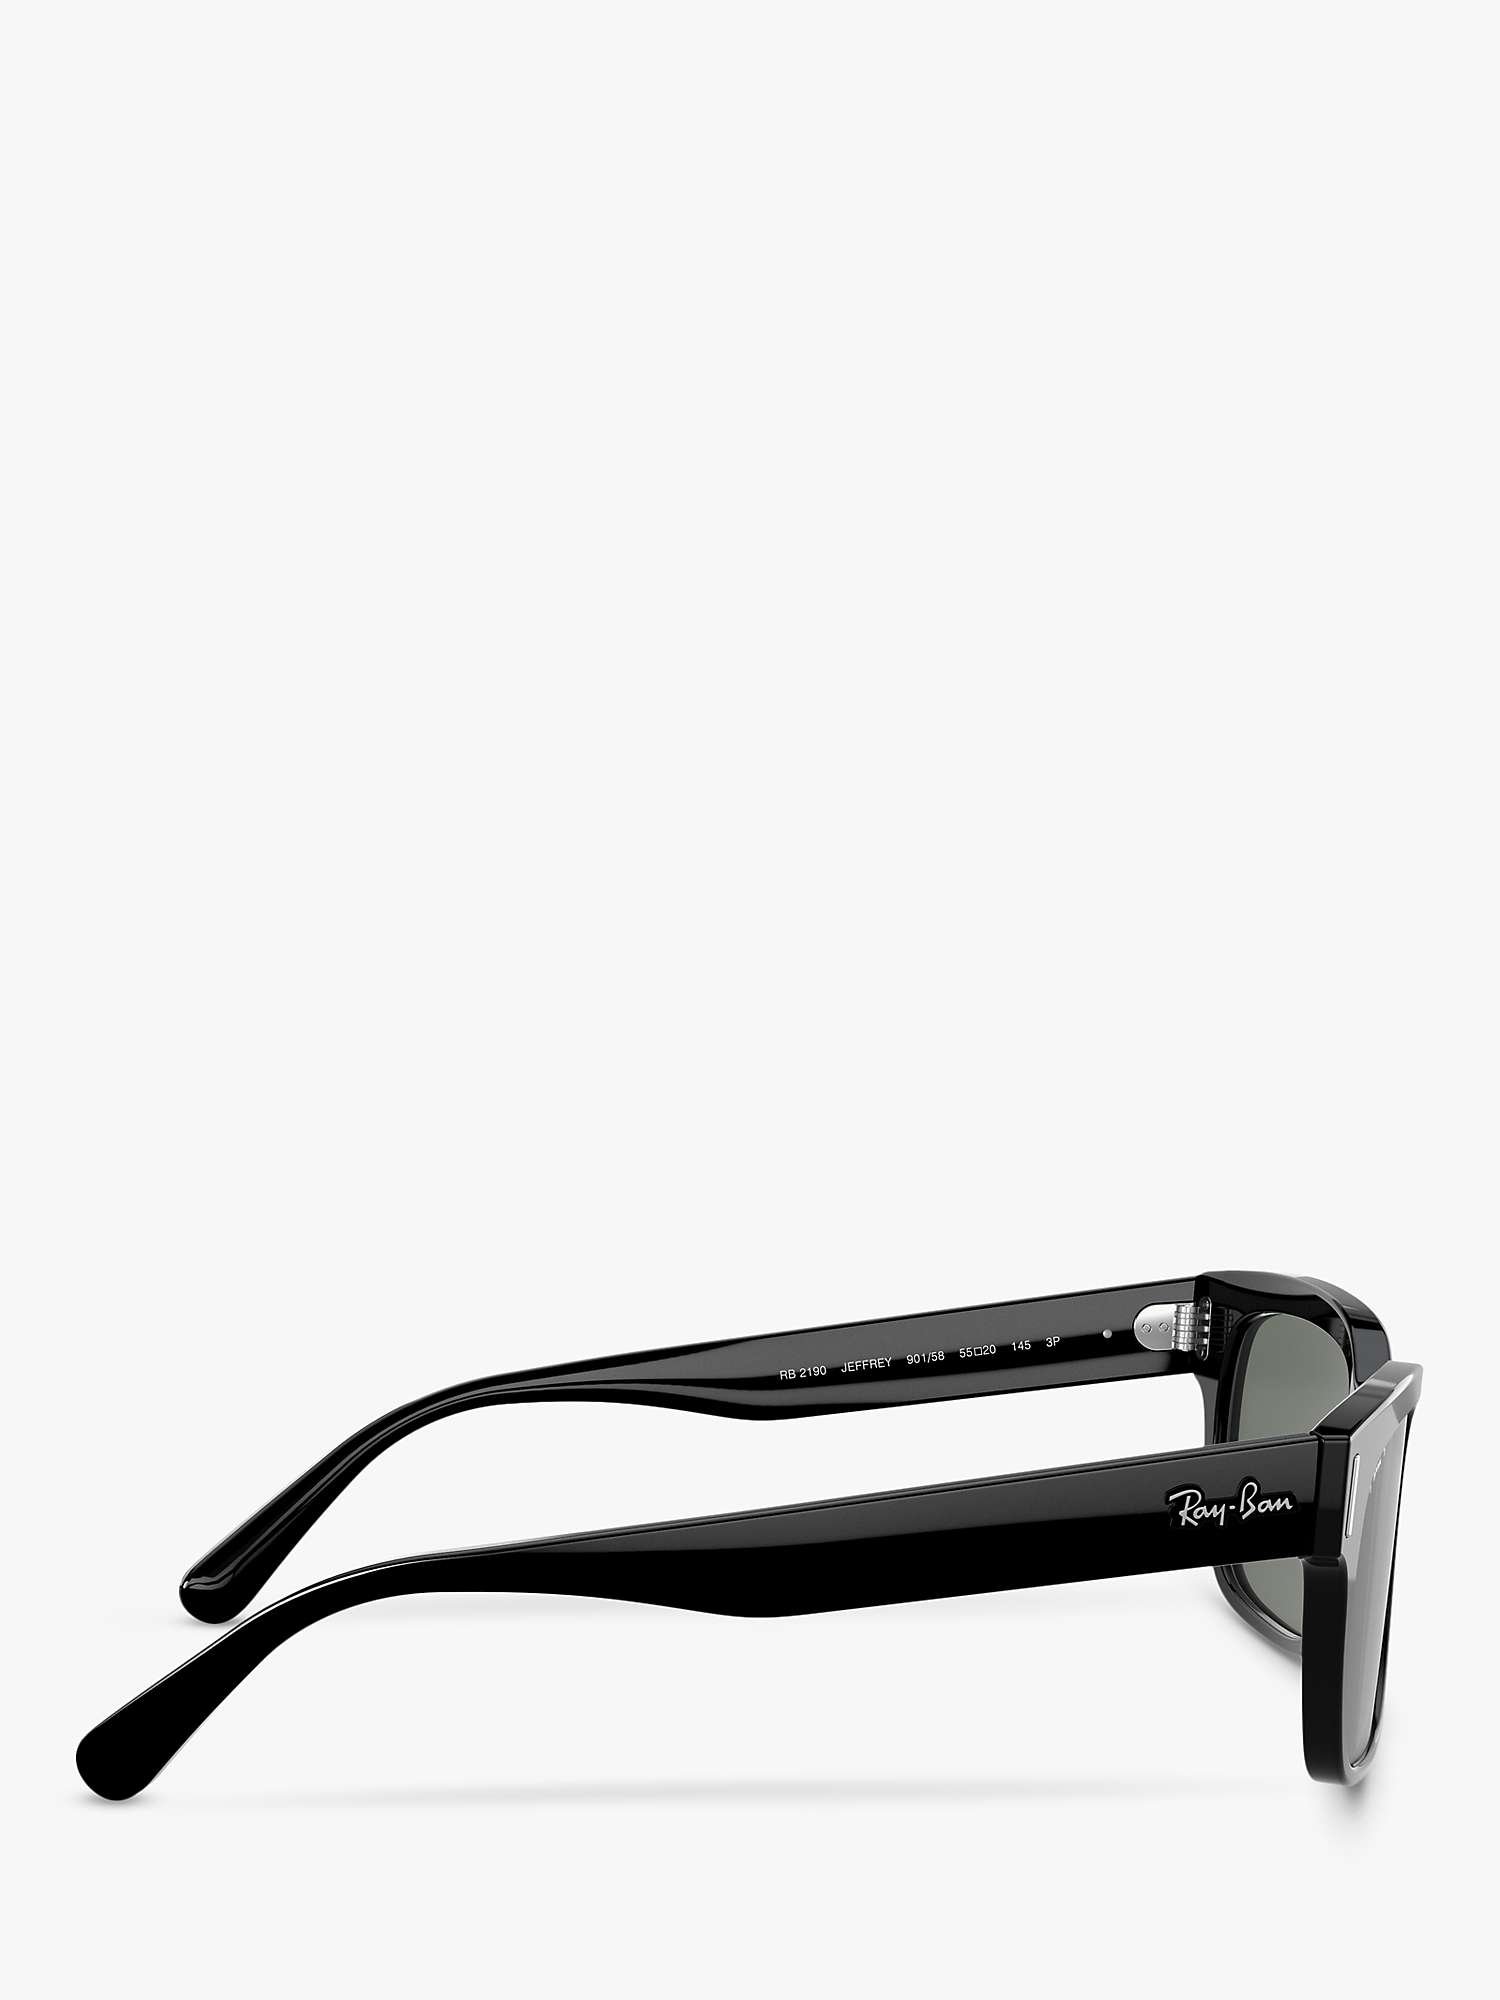 Buy Ray-Ban RB2190 Men's Polarised Square Sunglasses, Black/Grey Online at johnlewis.com